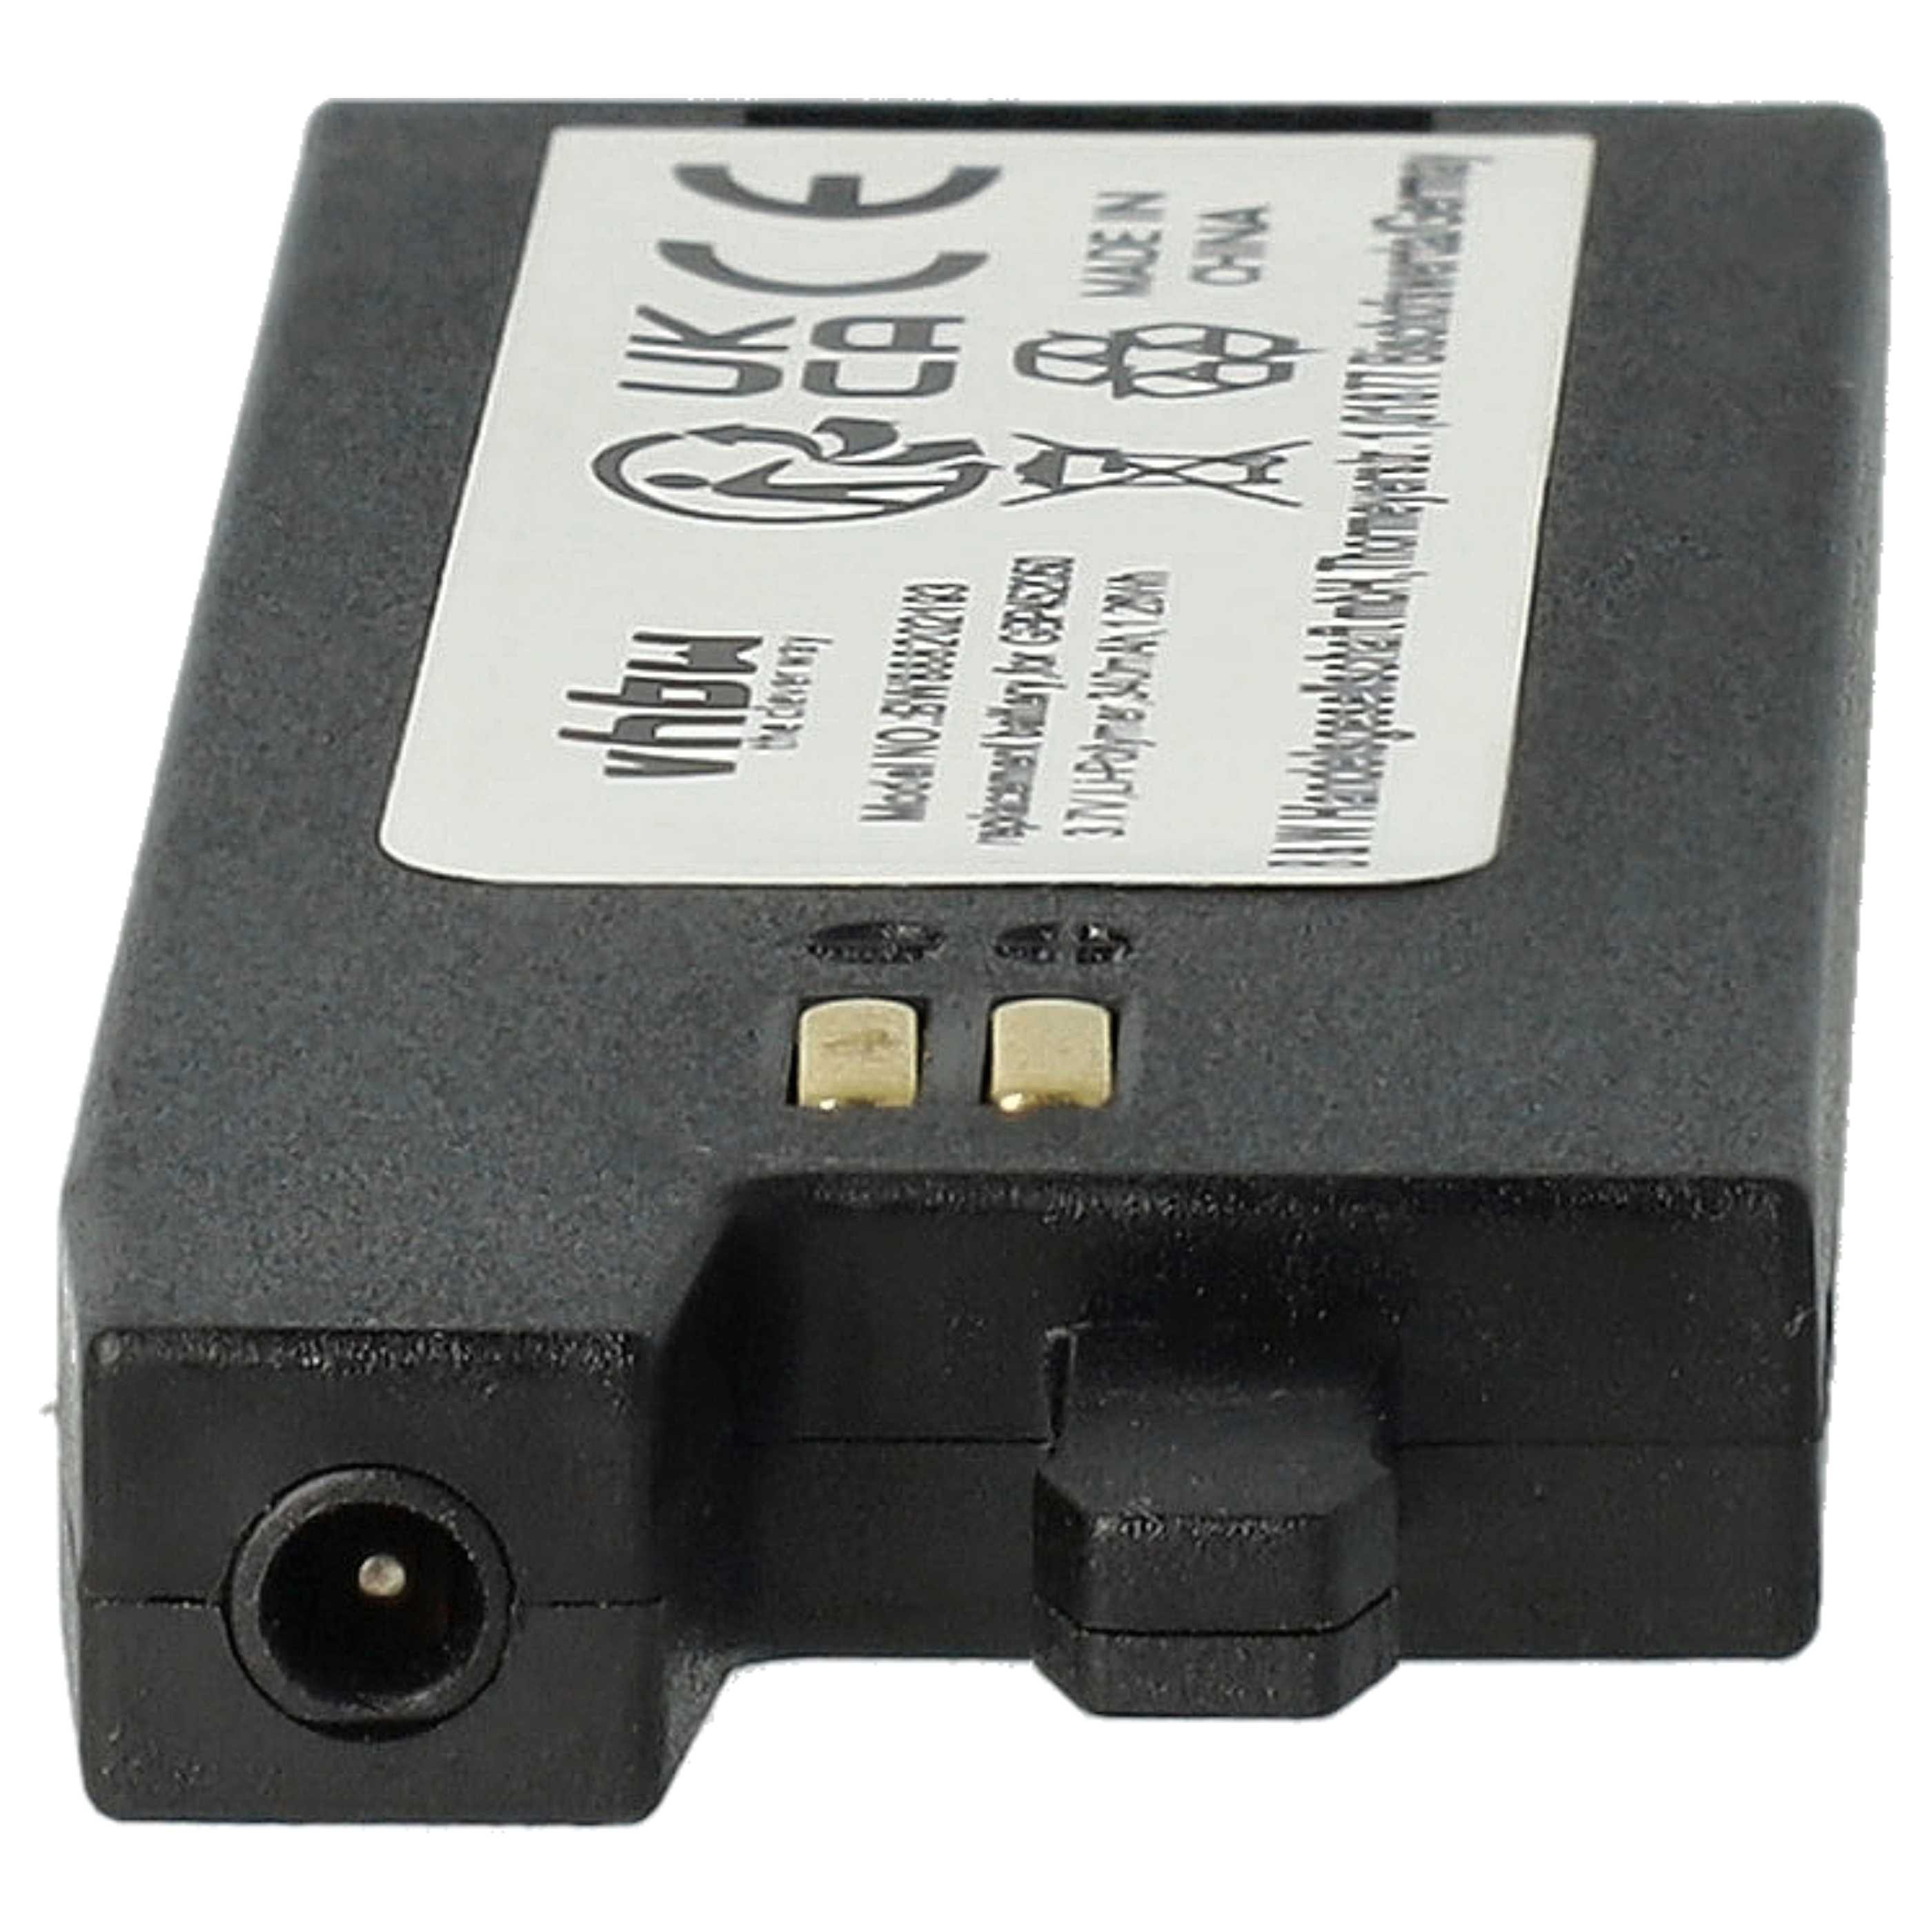 Akumulator do automatycznego stroika, tunera zamiennik Gibson GBP452050 - 340 mAh 3,7 V LiPo